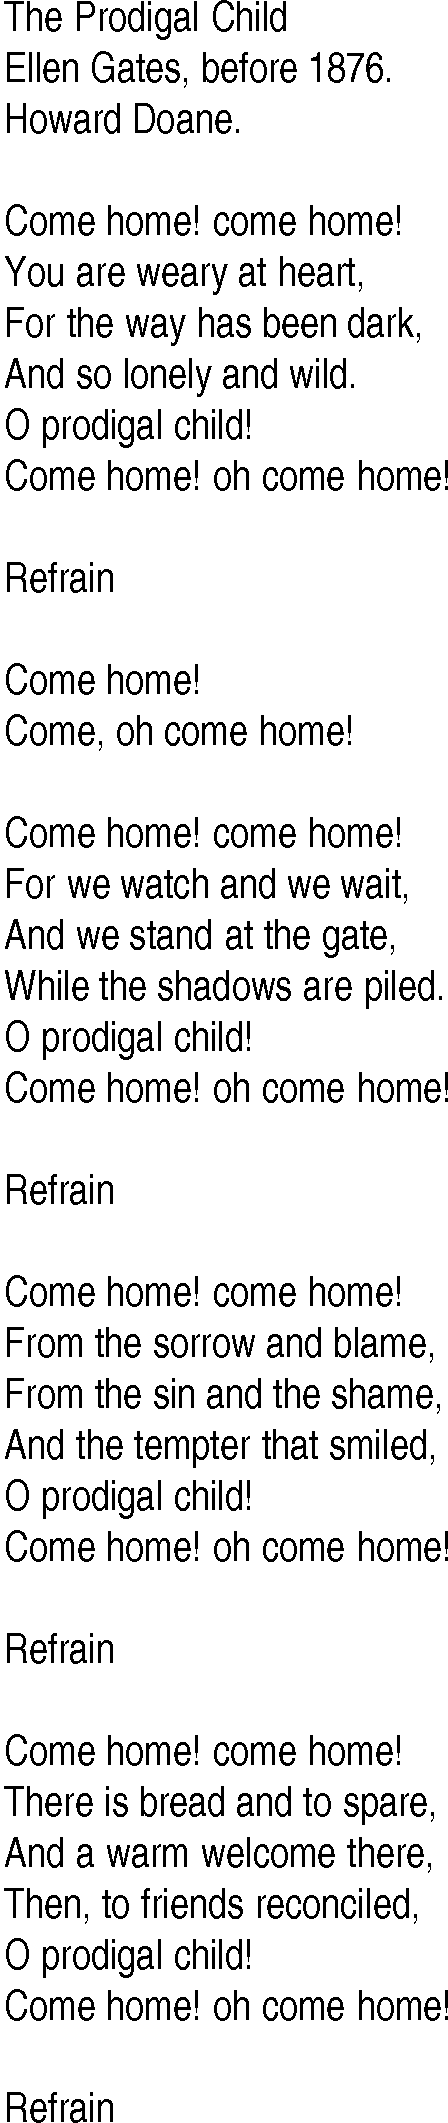 Hymn and Gospel Song: The Prodigal Child by Ellen Gates before lyrics